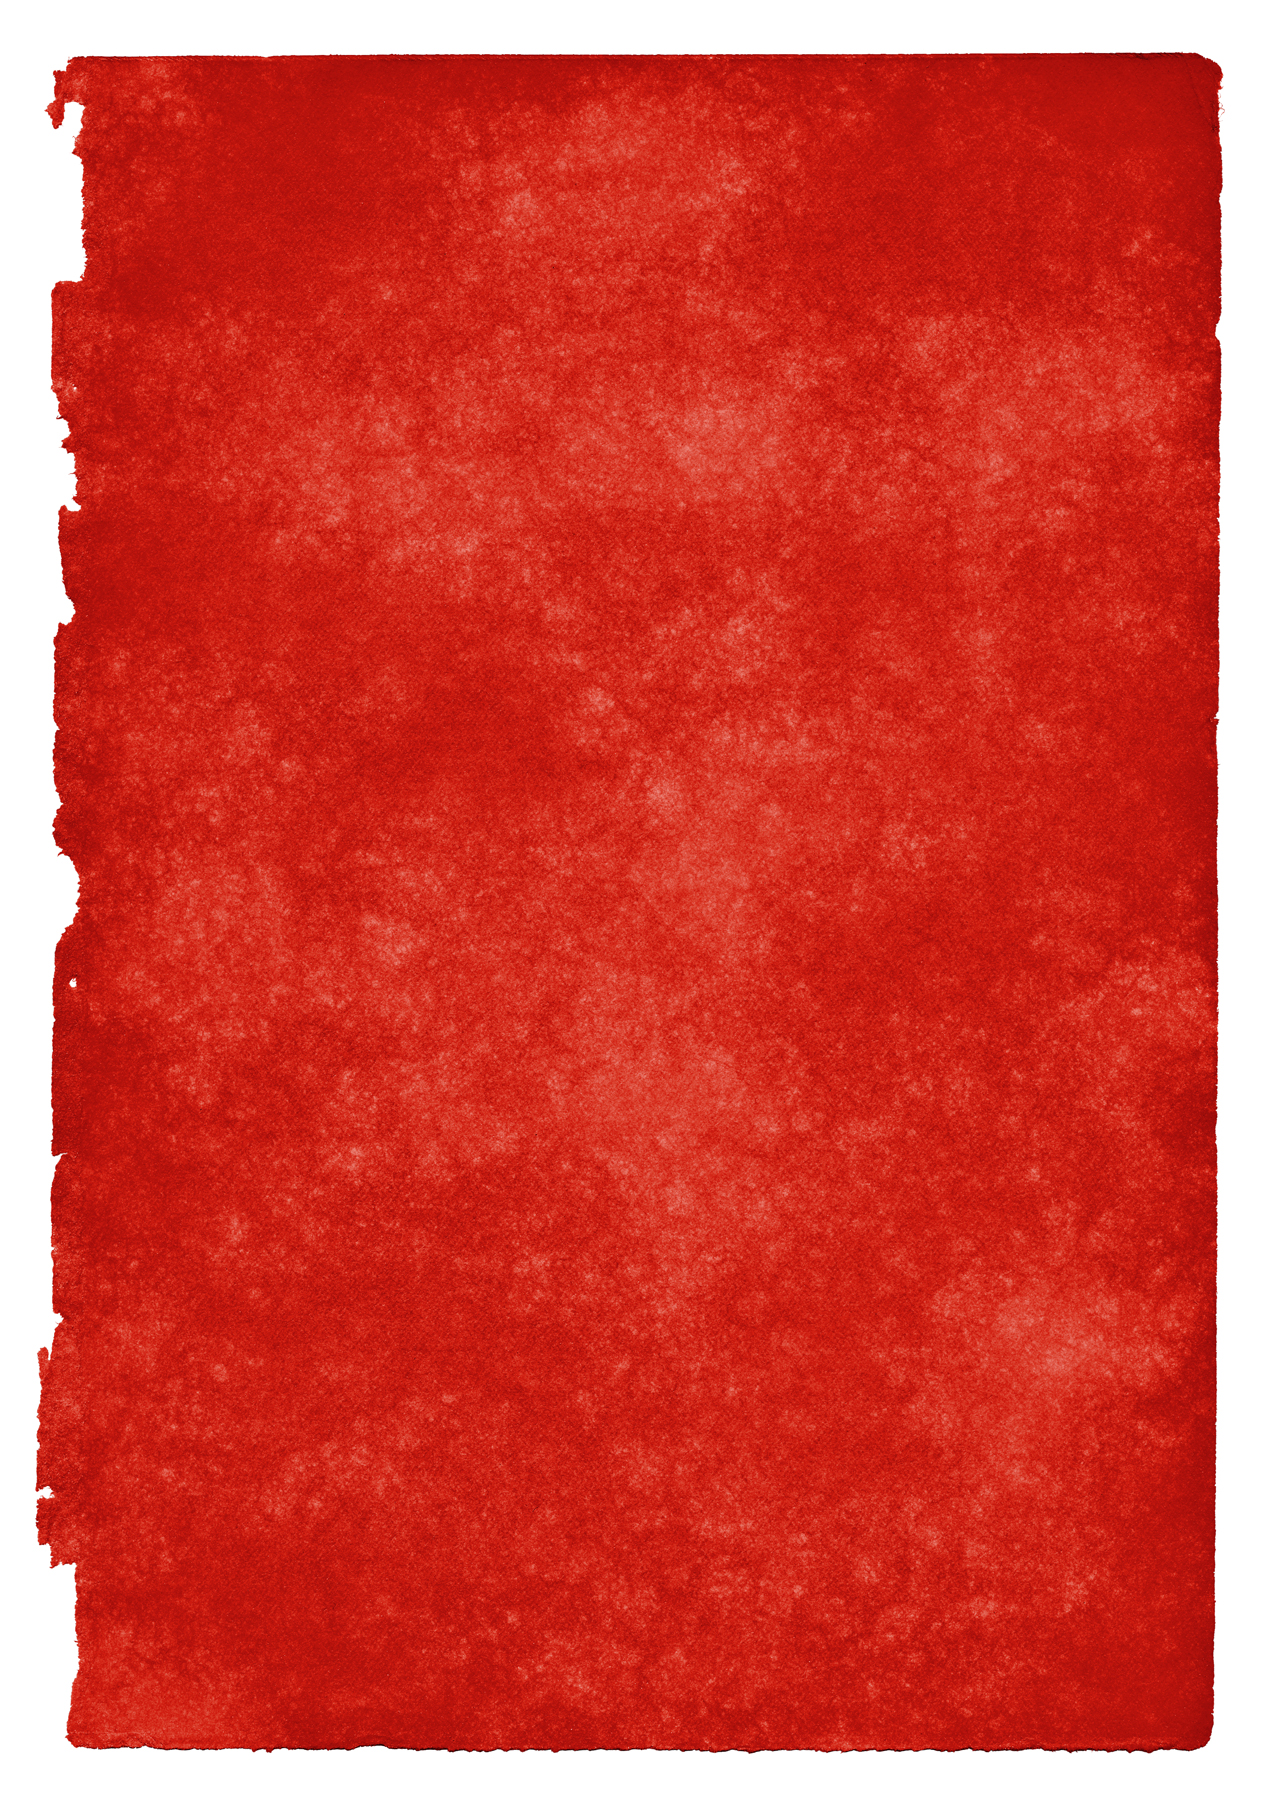 Vintage grunge paper - red photo